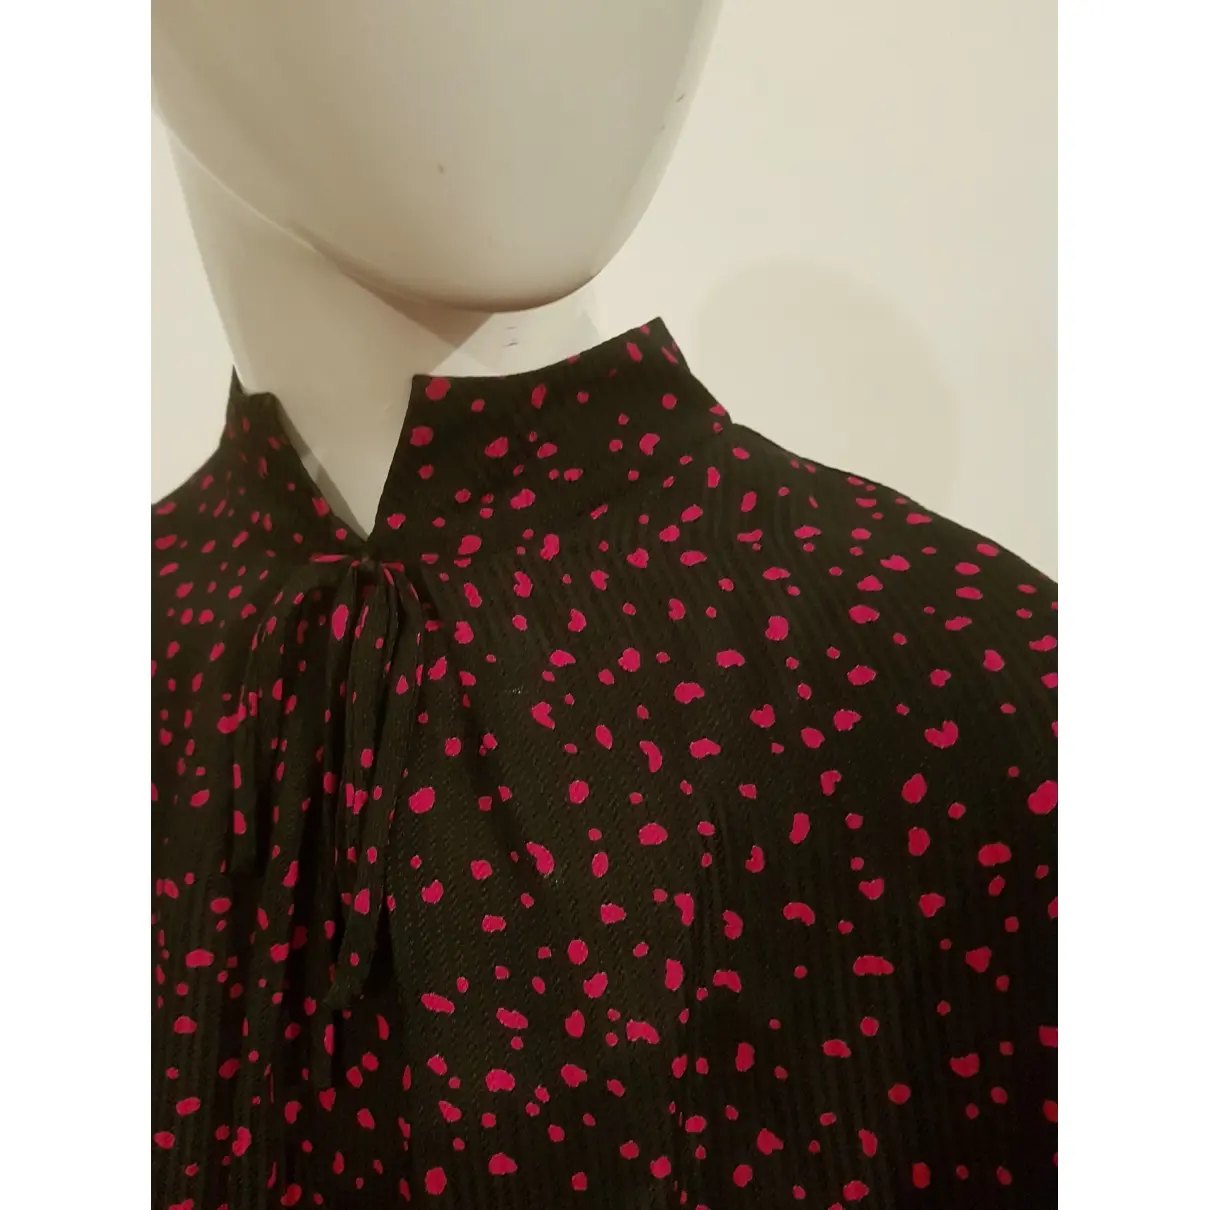 Loris Azzaro Silk blouse for sale - Vintage